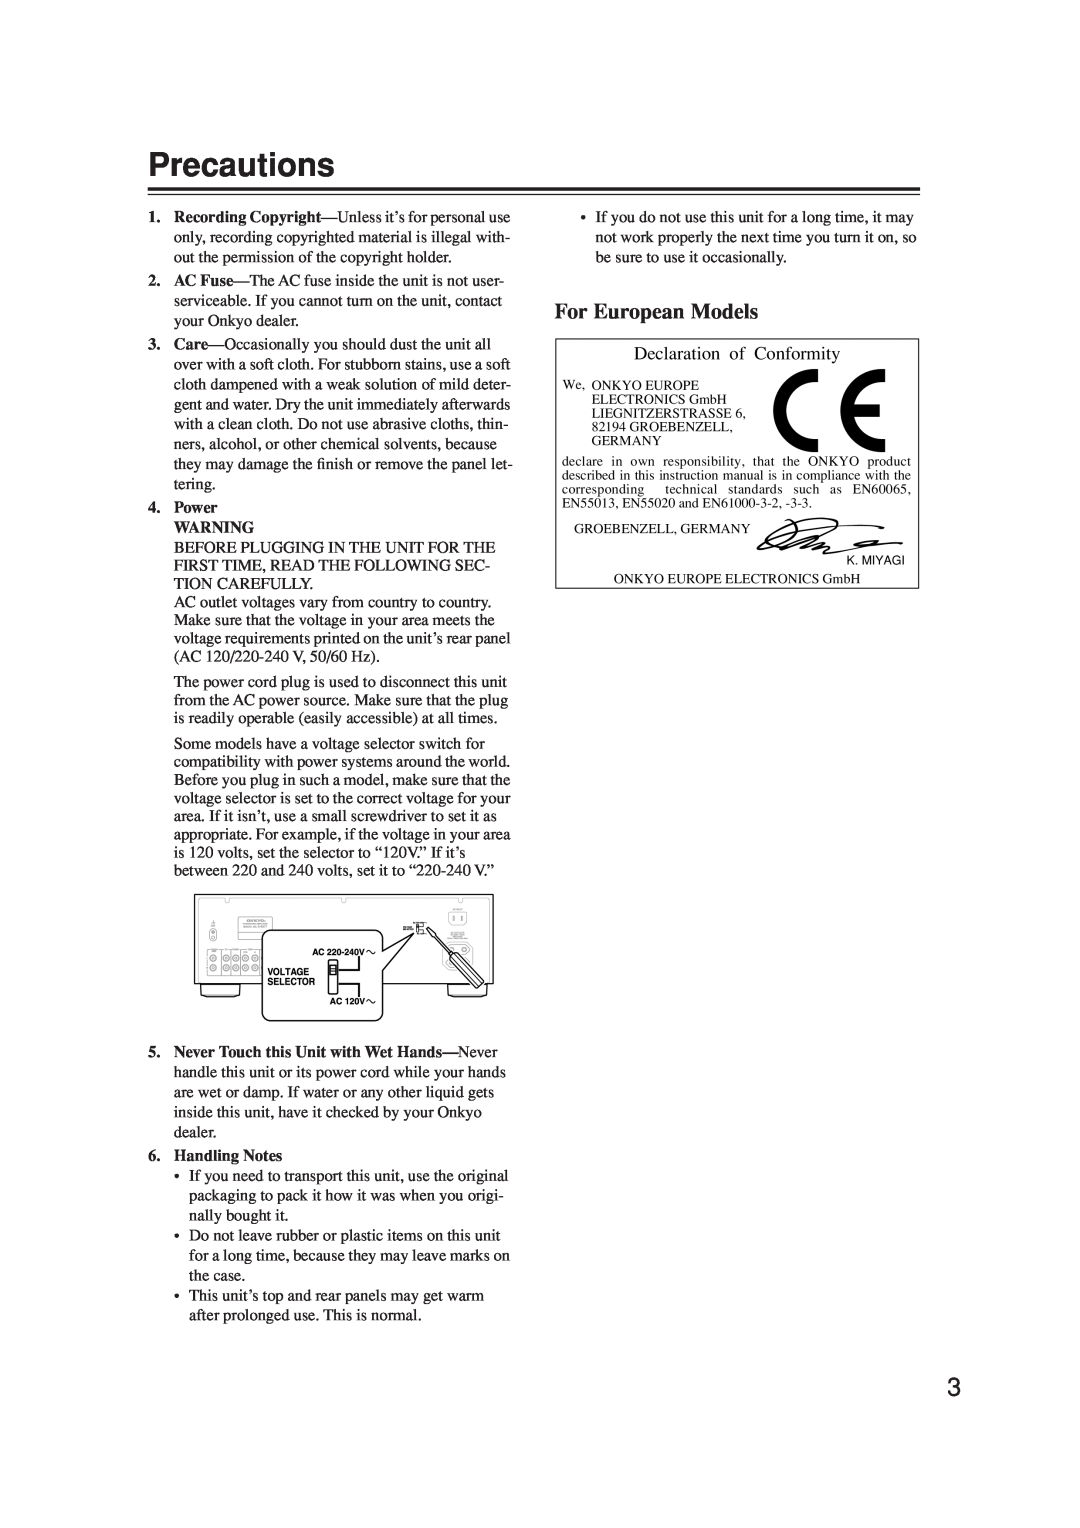 Onkyo A-9377 instruction manual Precautions, Power, Handling Notes, For European Models, Declaration of Conformity 